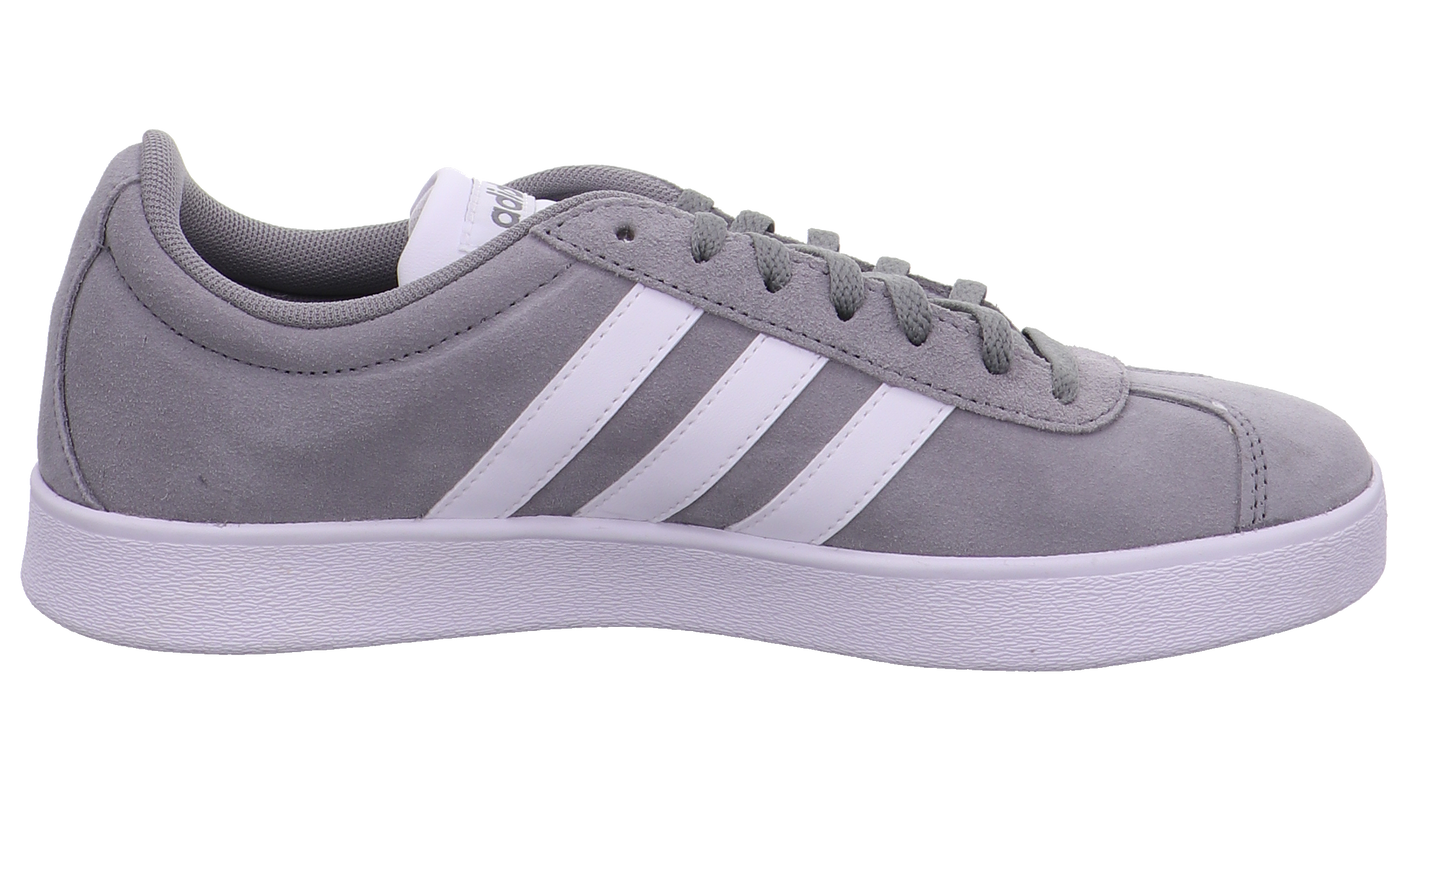 Adidas AG Sneaker grau kombi Bild11